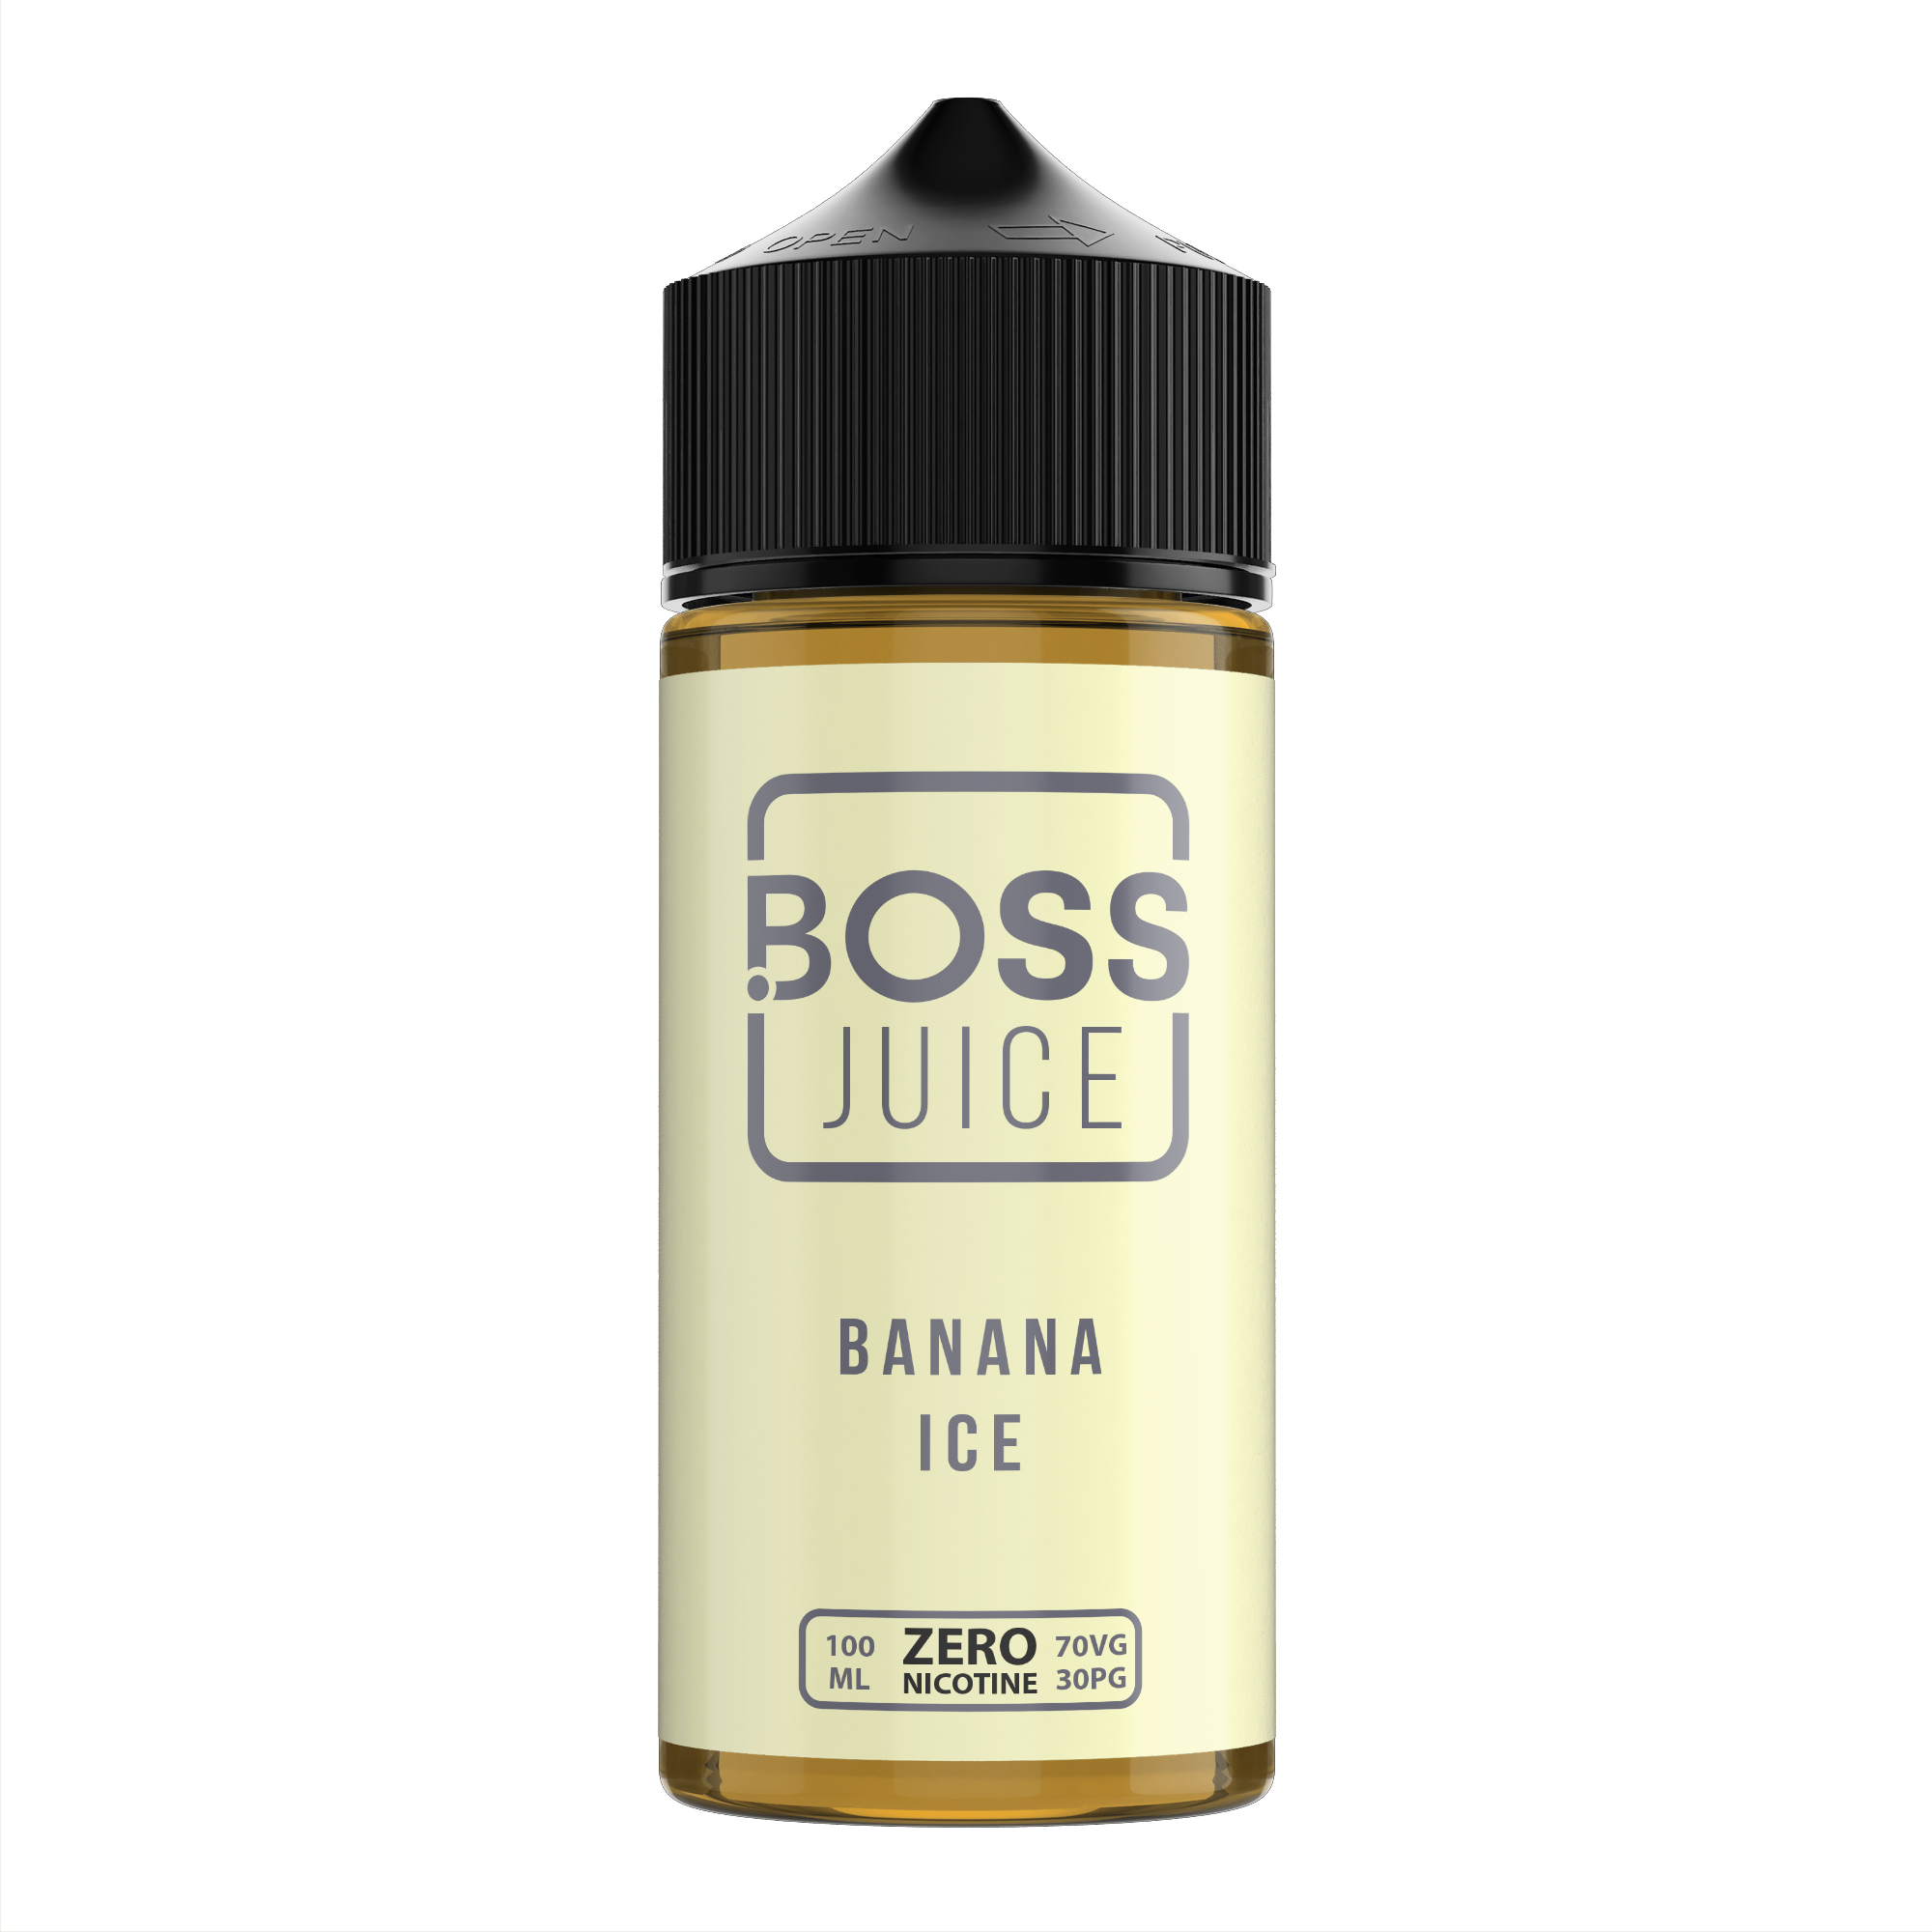 Banana ice 100ml by Boss Juice